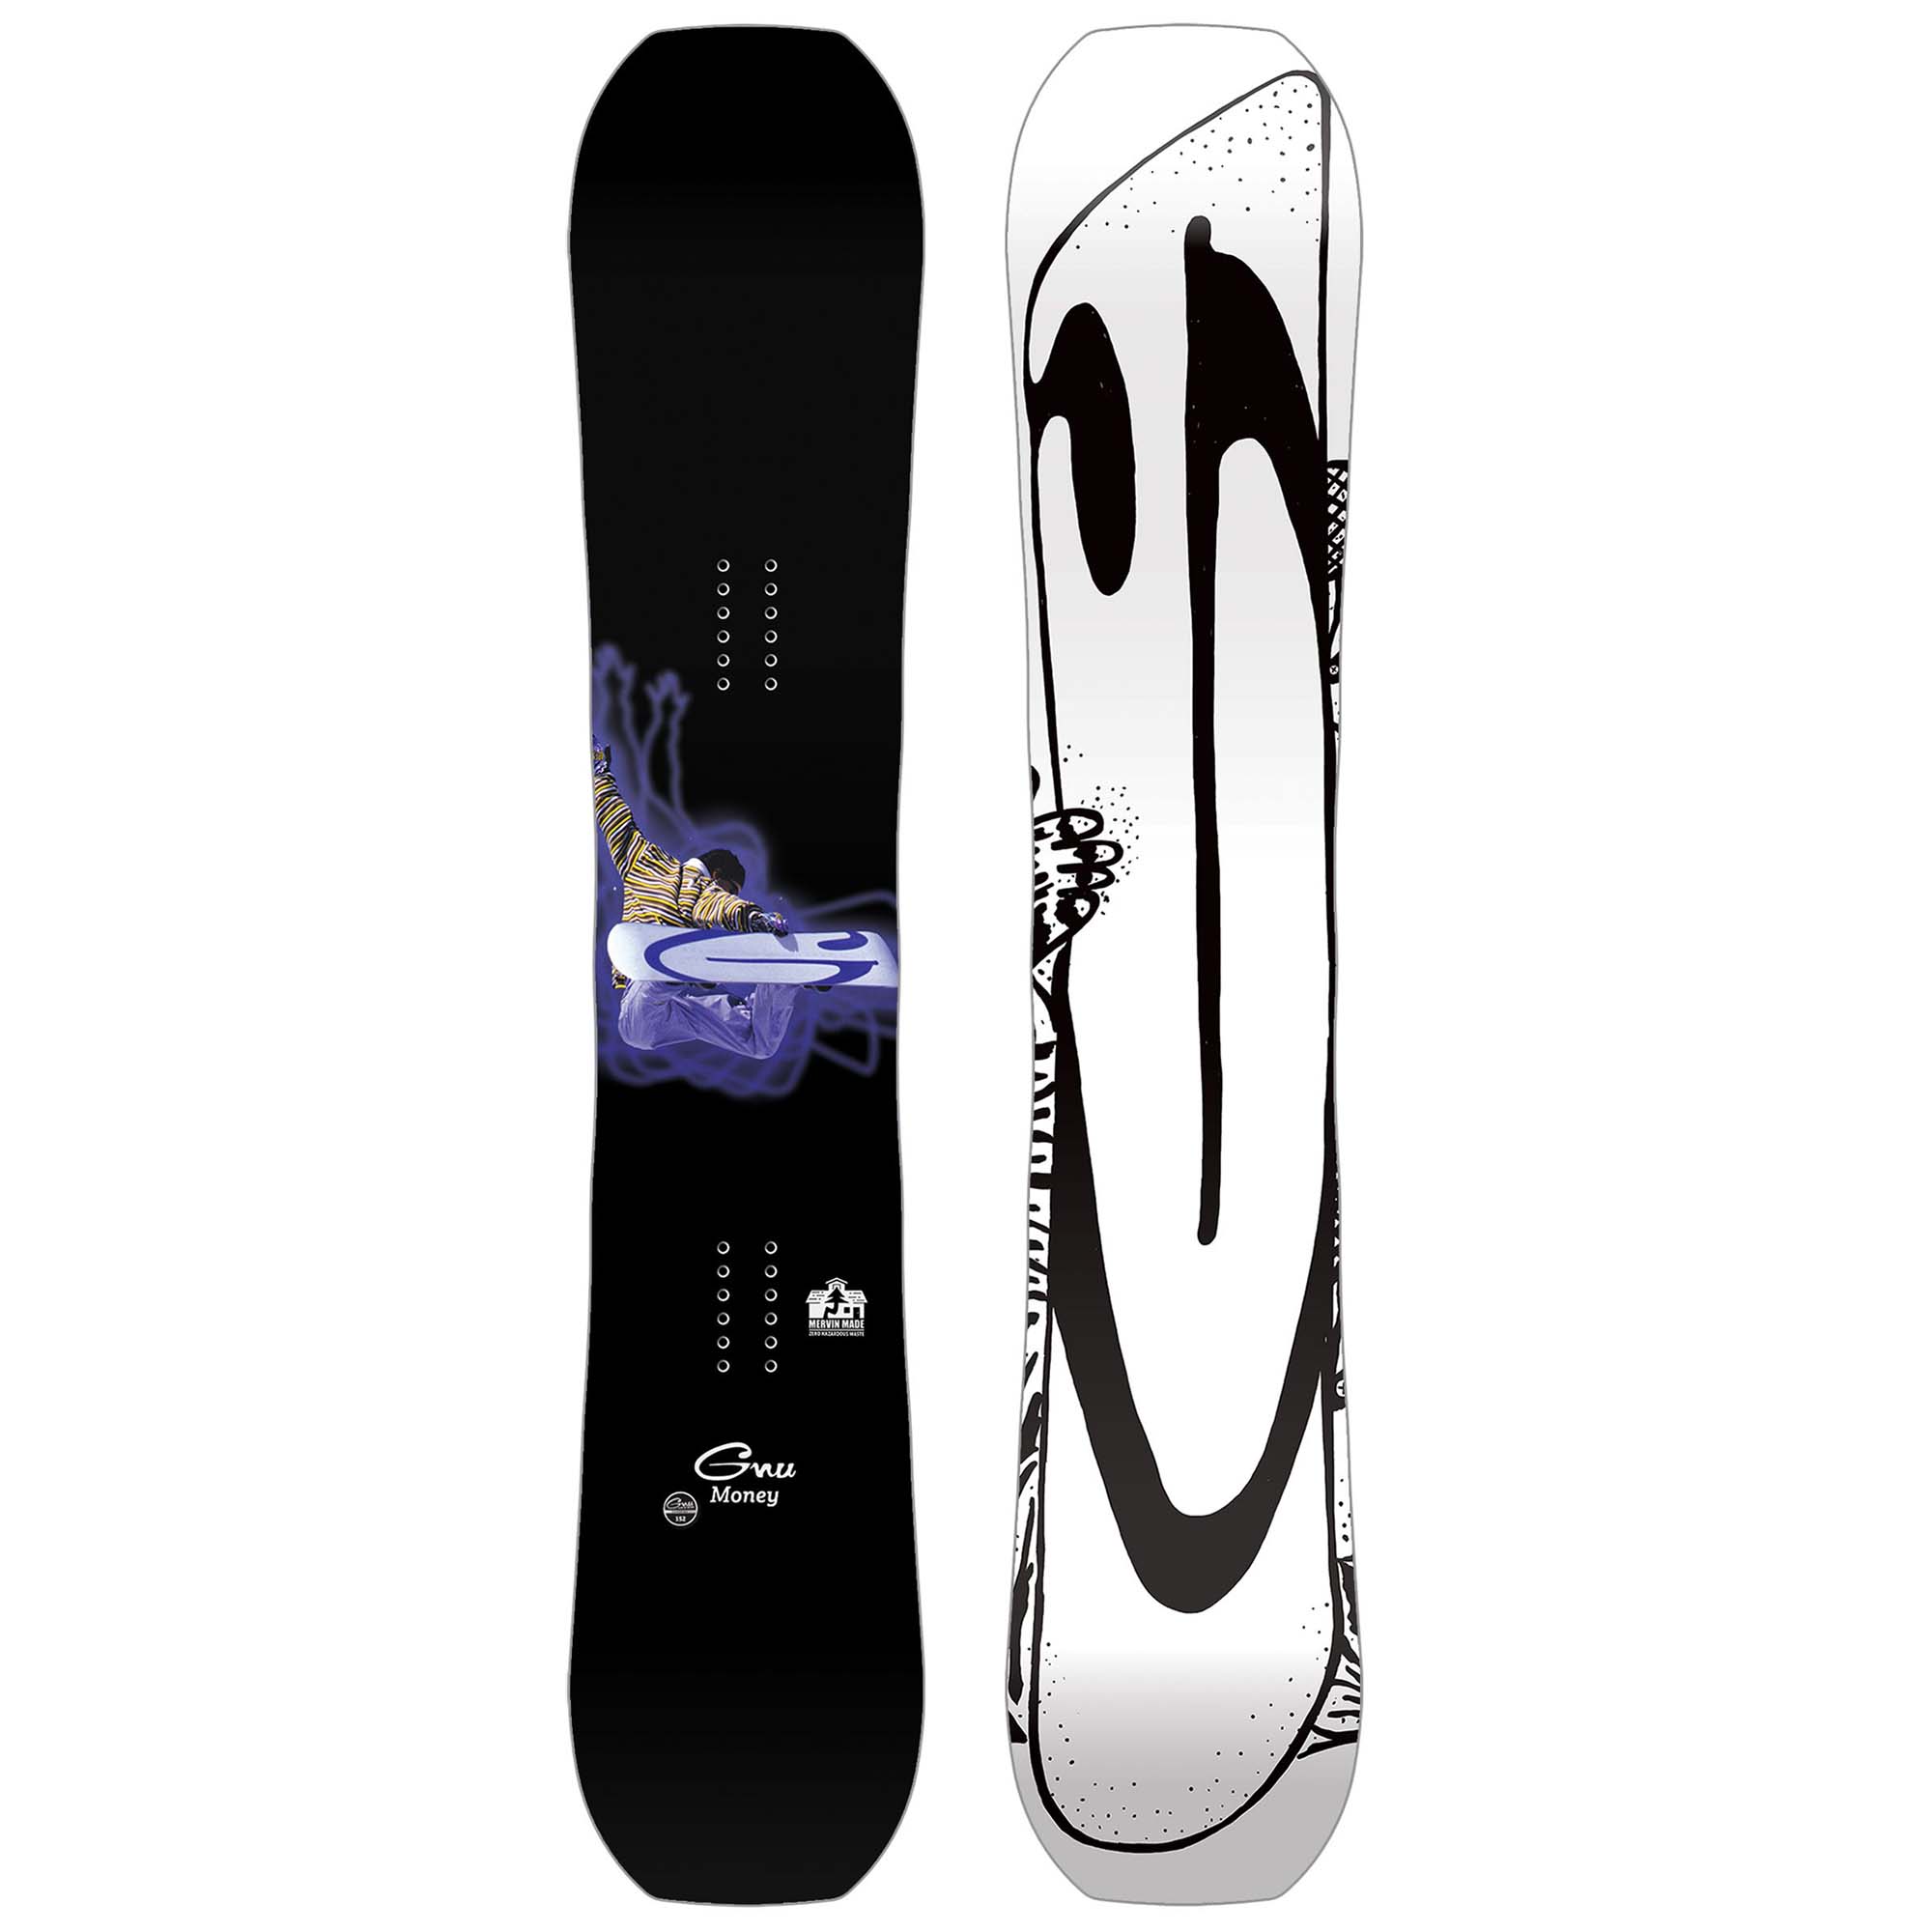 GNU Money Freestyle/Park Snowboard